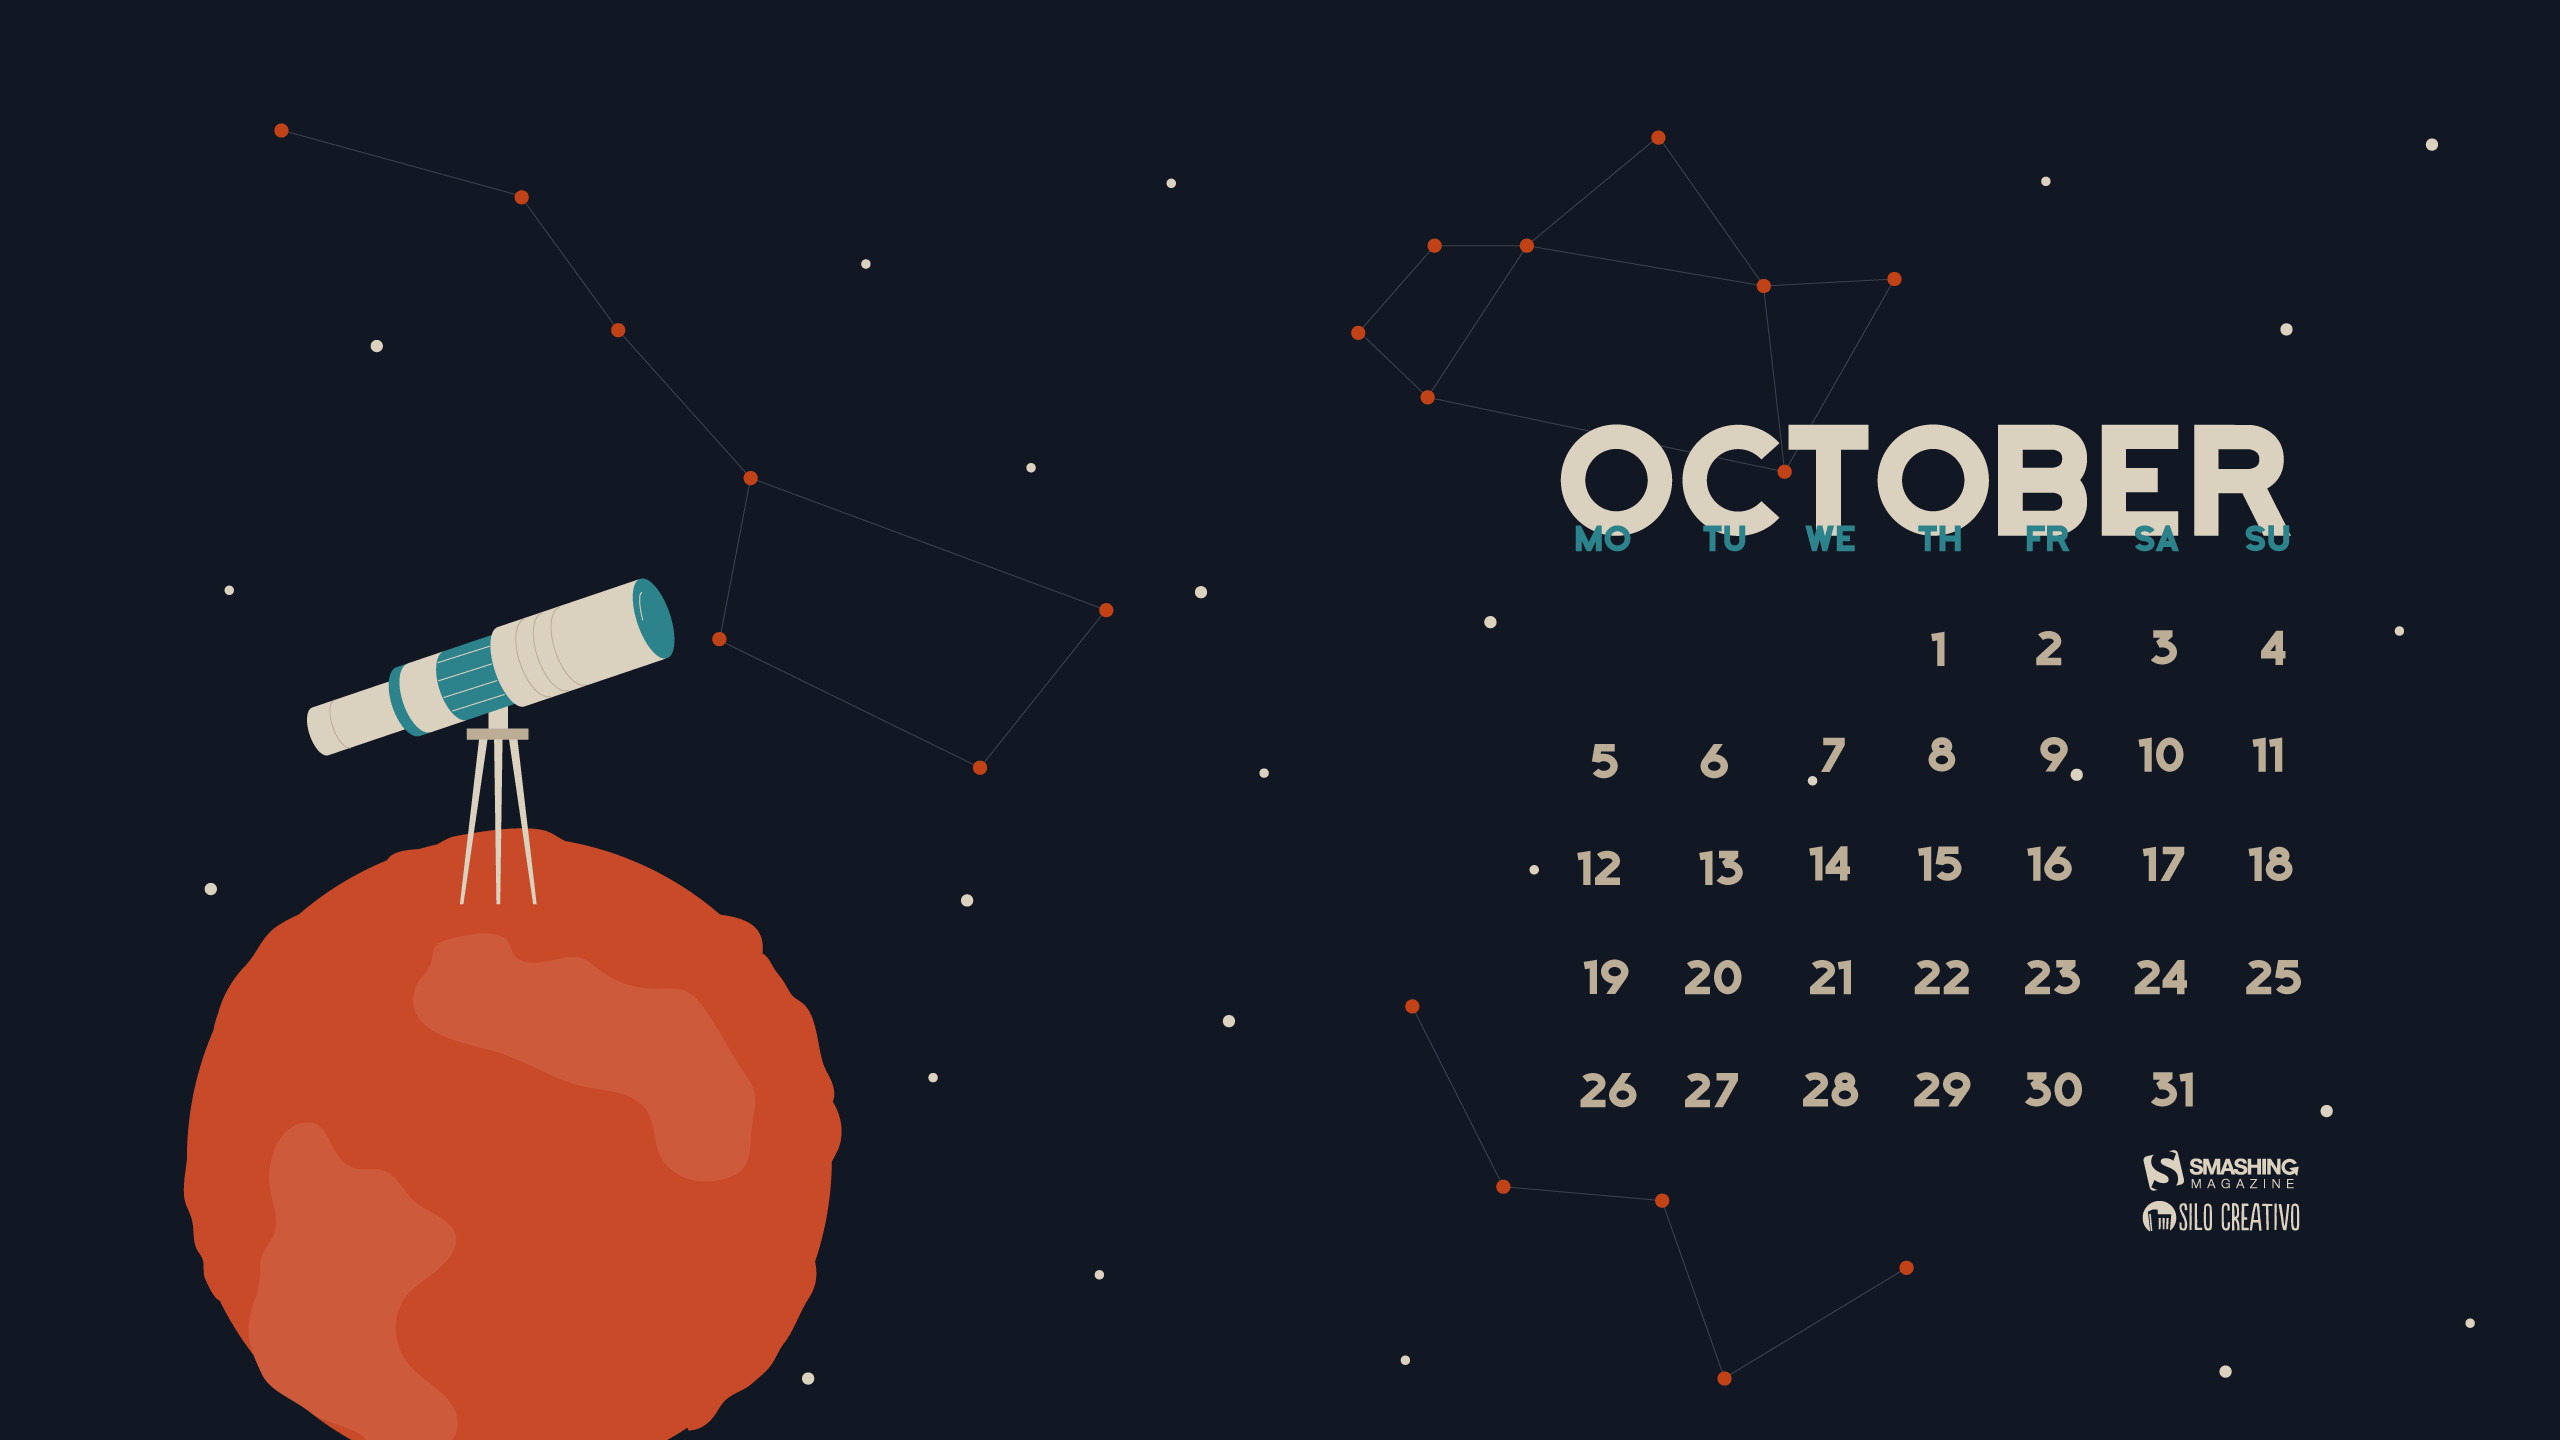 2560x1440 Desktop Wallpaper Calendars: October 2015